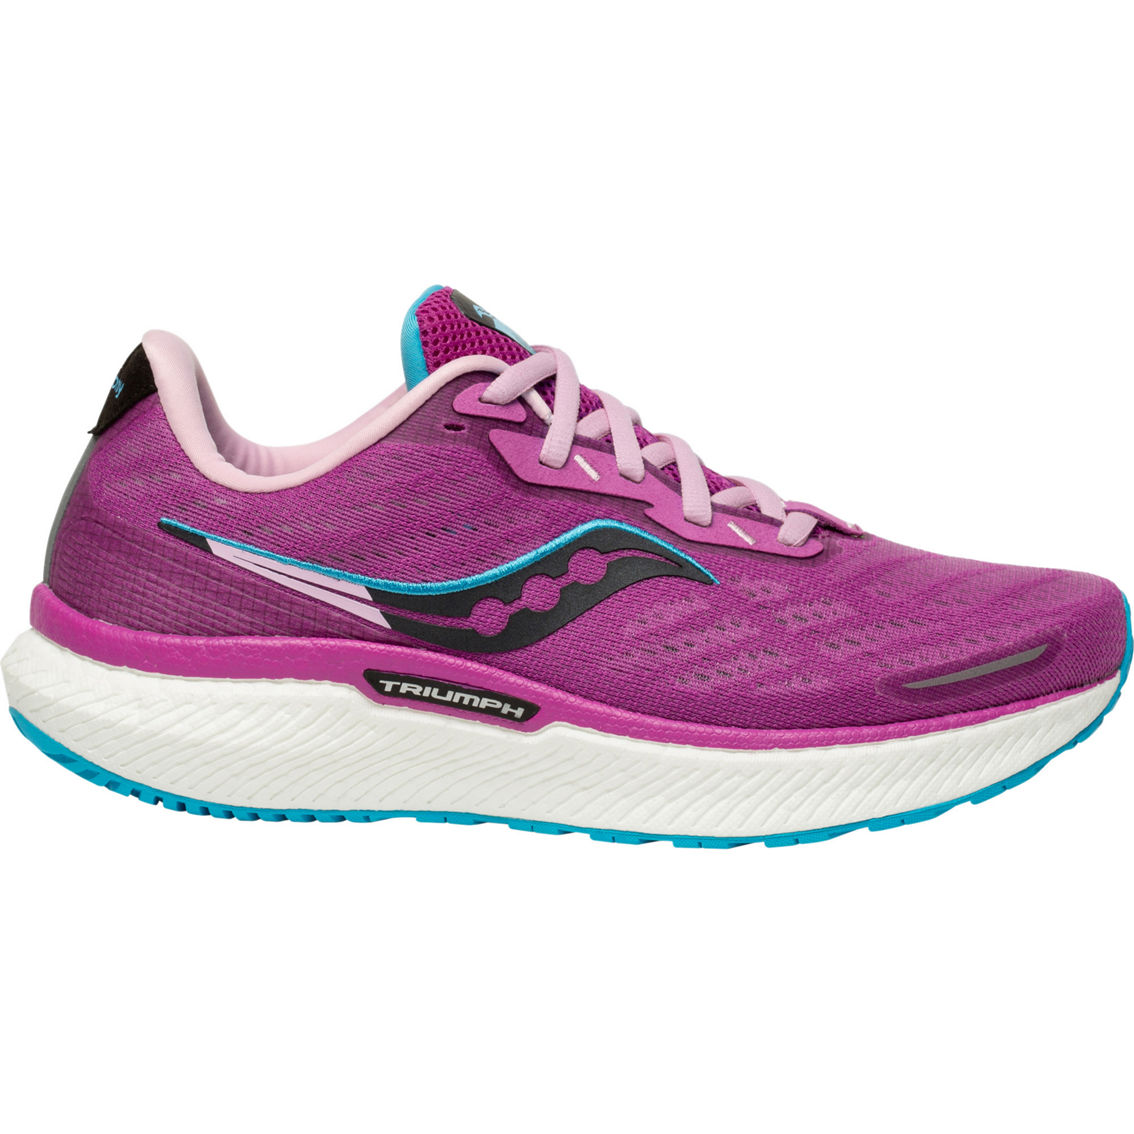 Saucony Women's Triumph 19 Running Shoes | Women's Athletic Shoes ...